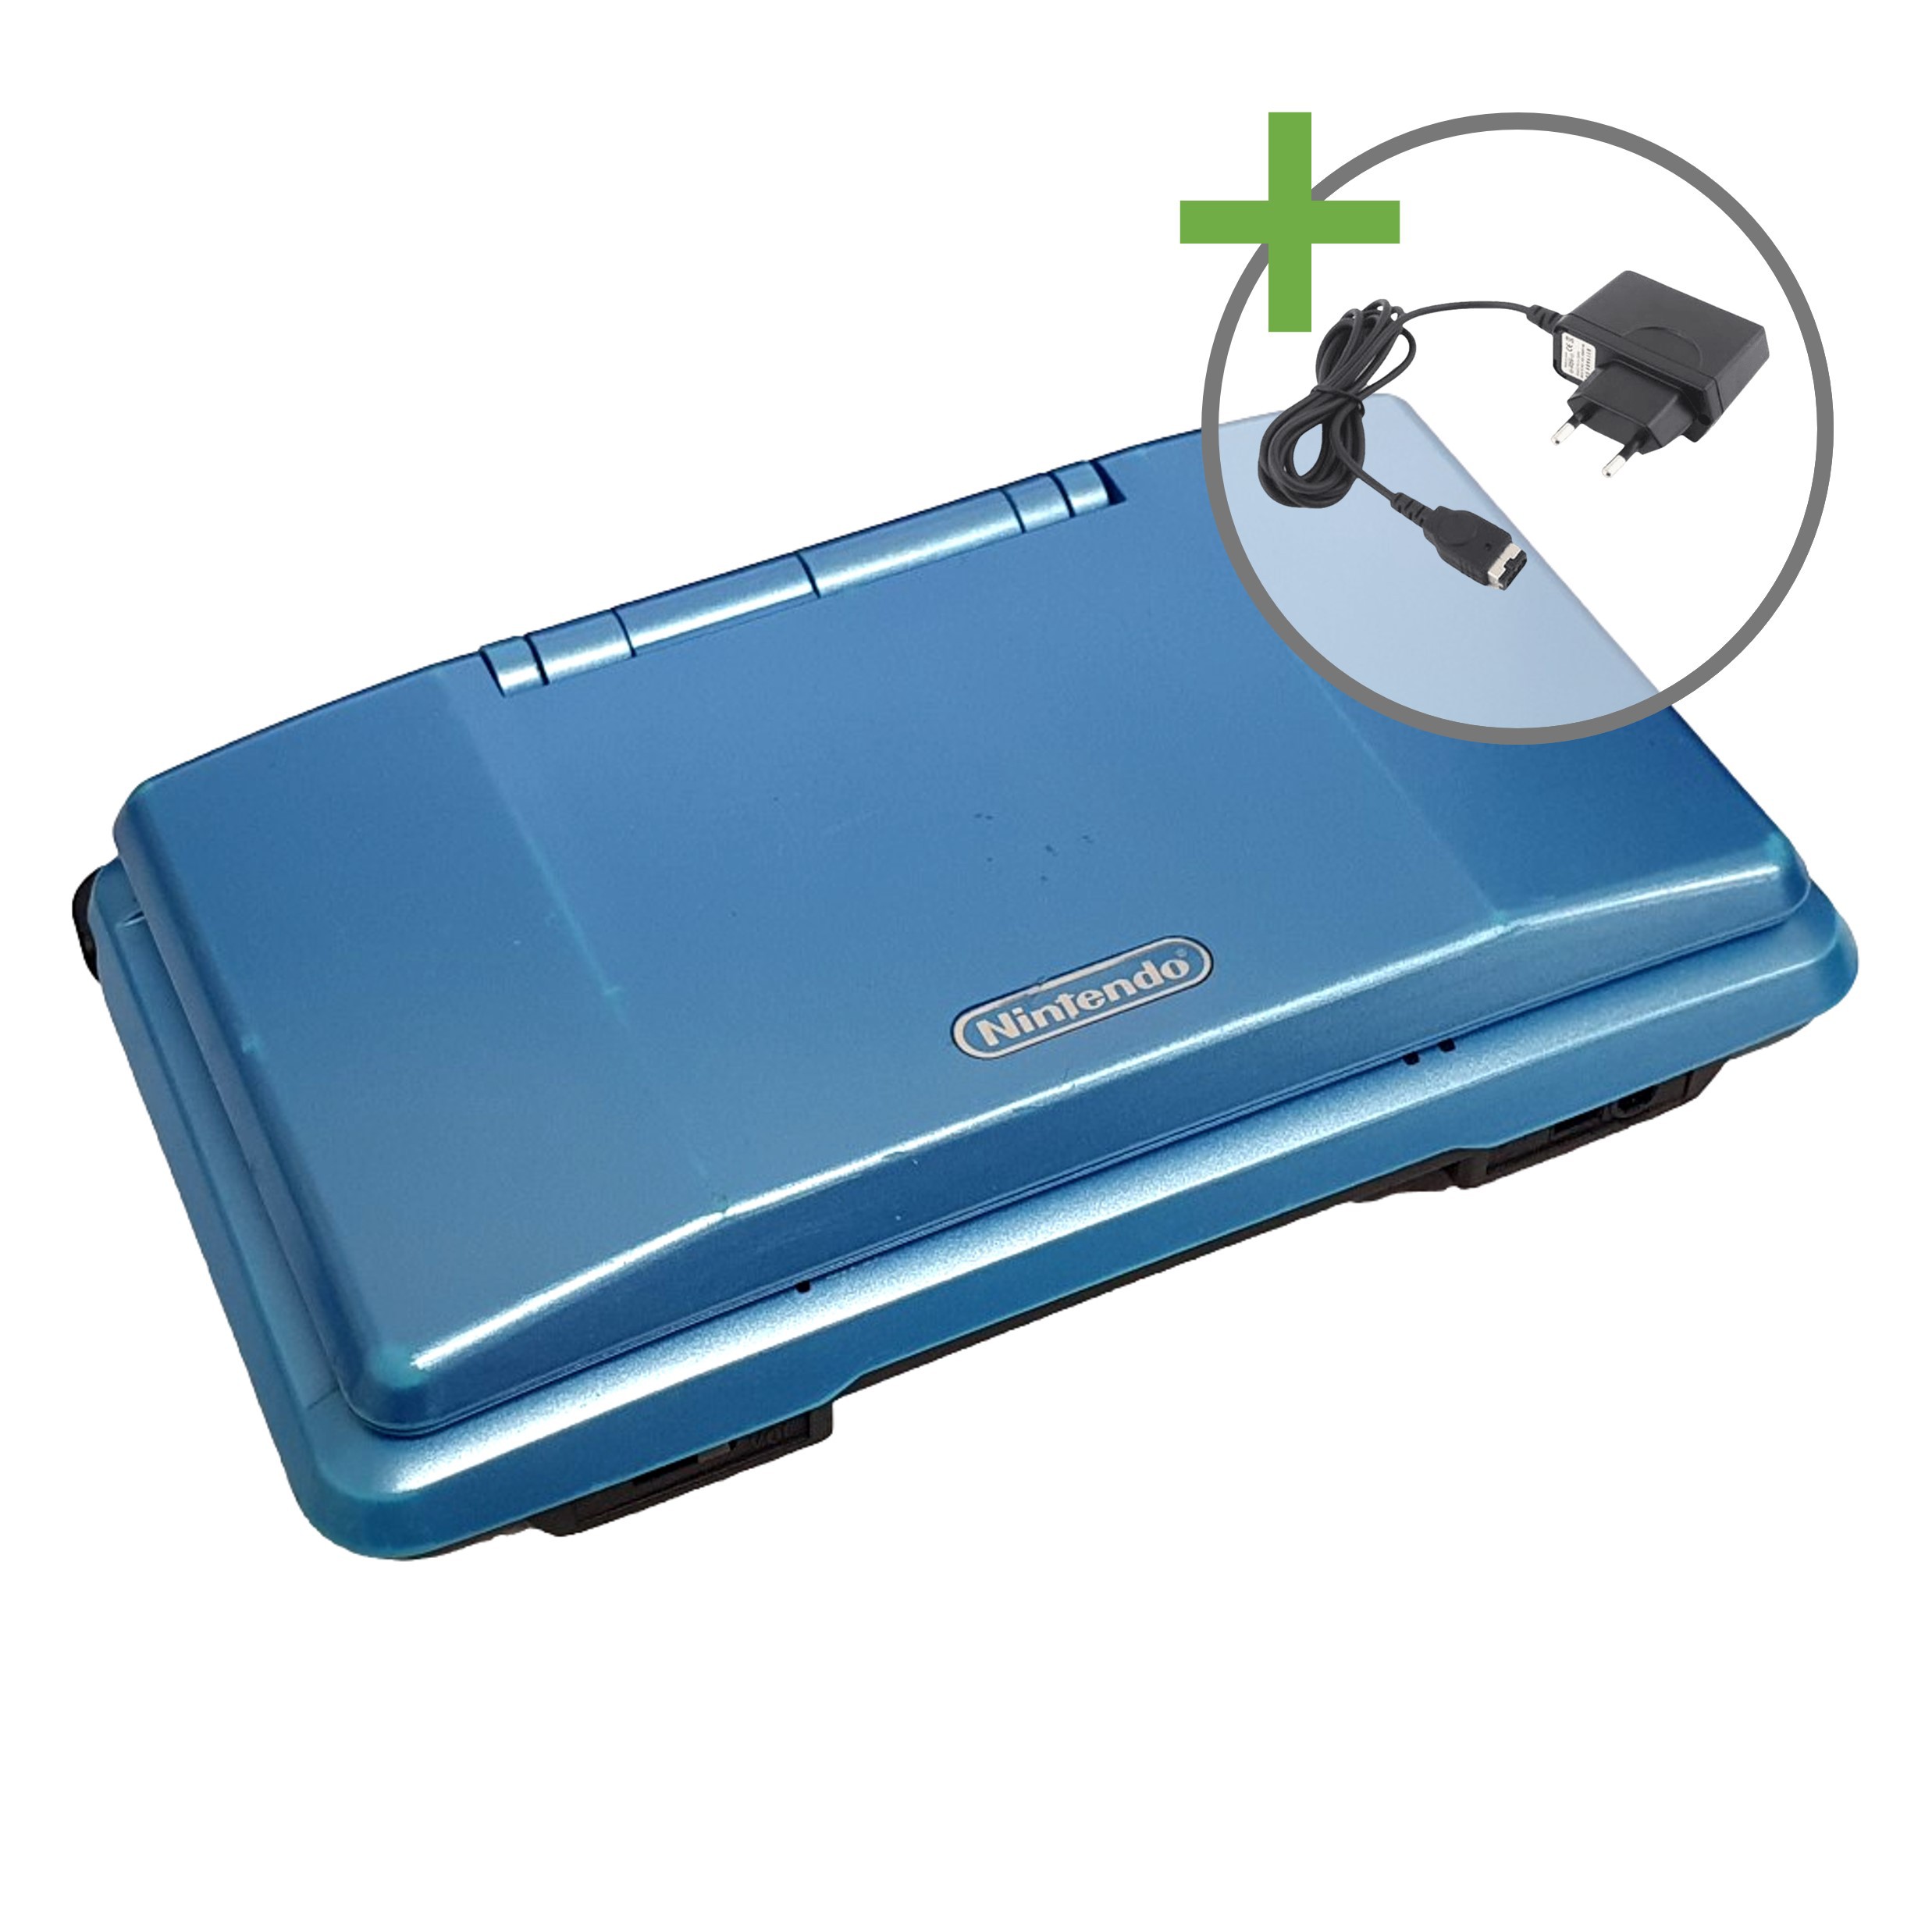 Nintendo DS Original - Ocean Blue - Nintendo DS Hardware - 2